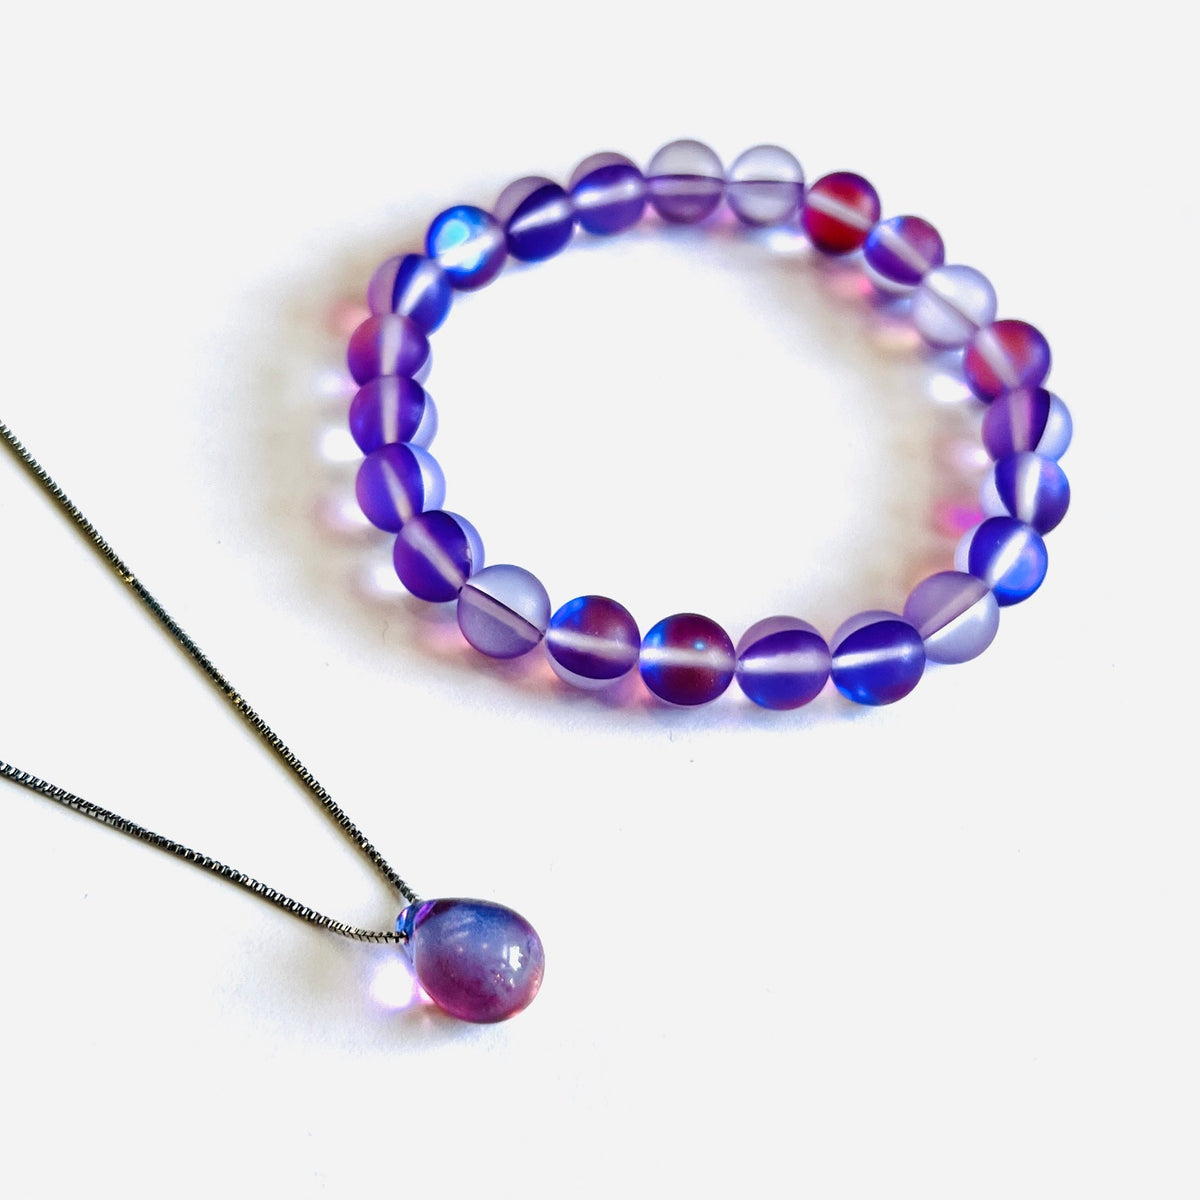 Mermaid Tear Glass Pendant Necklace Jewelry - 